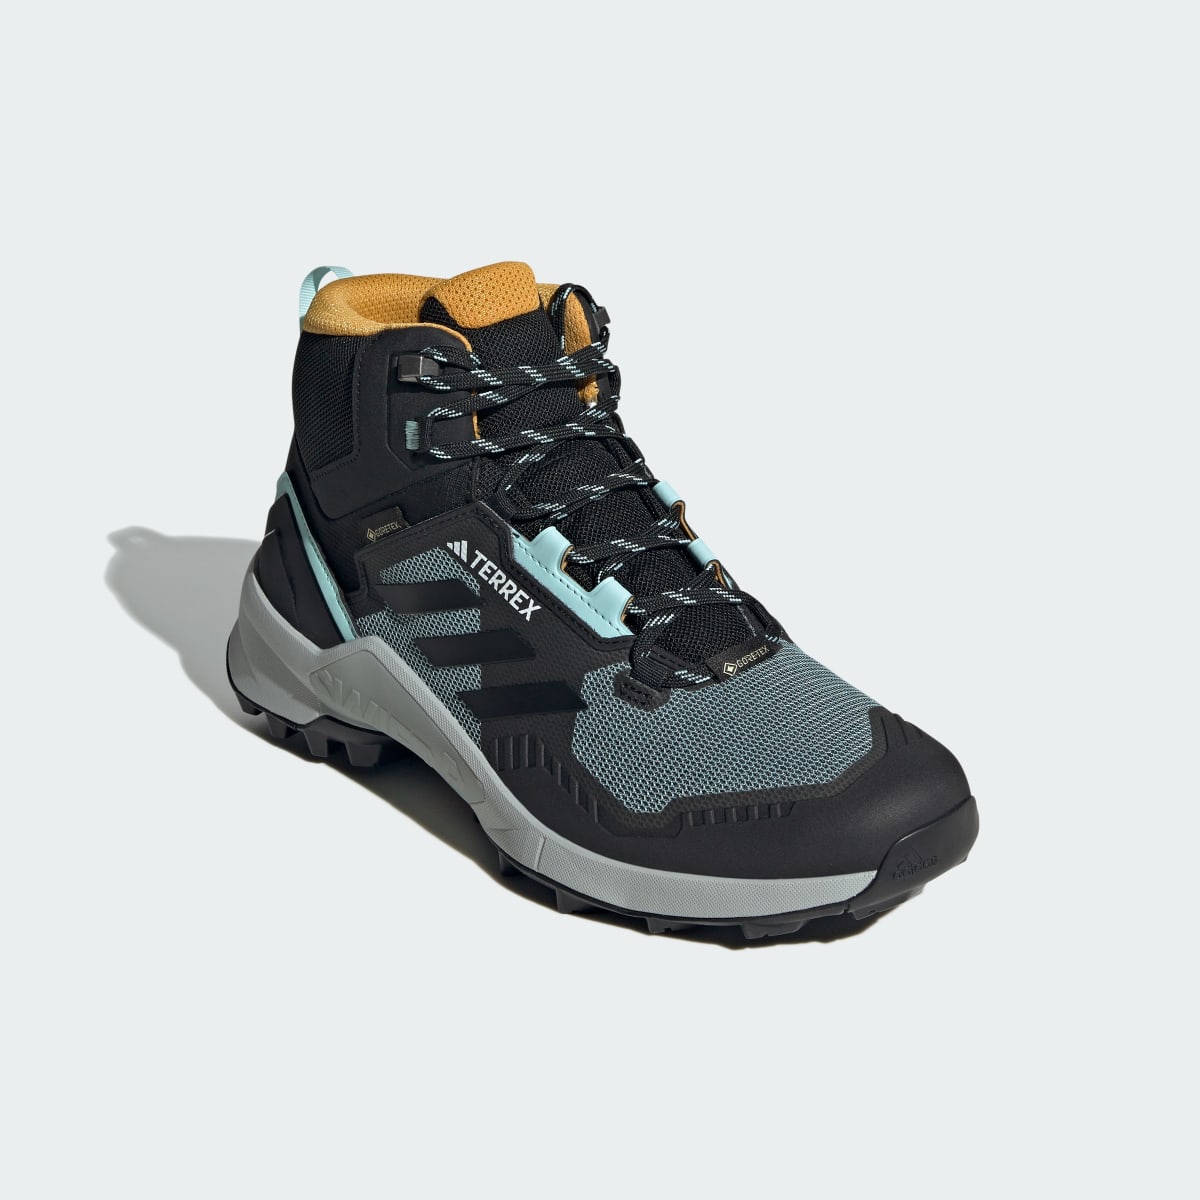 Adidas Terrex Swift R3 Mid GORE-TEX Hiking Shoes. 5